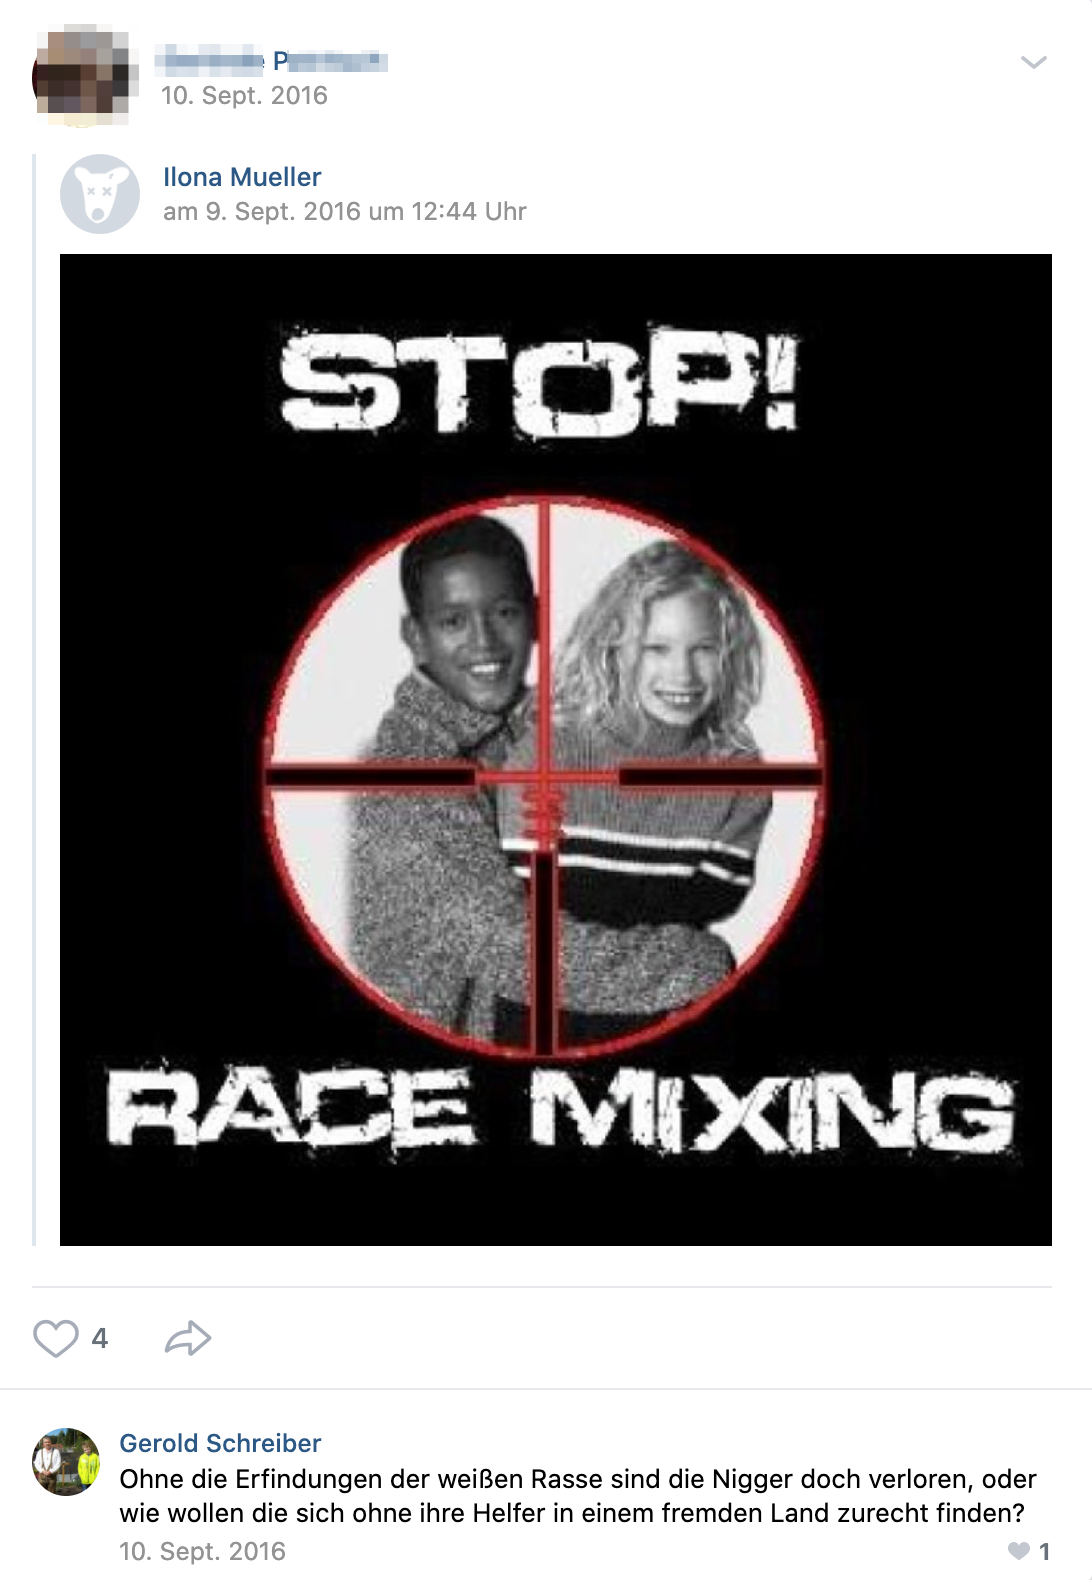 P. teilt rassistische Propaganda (Stops Race Mixing) mit rassistischem Kommentar (Screenshot vk.com)